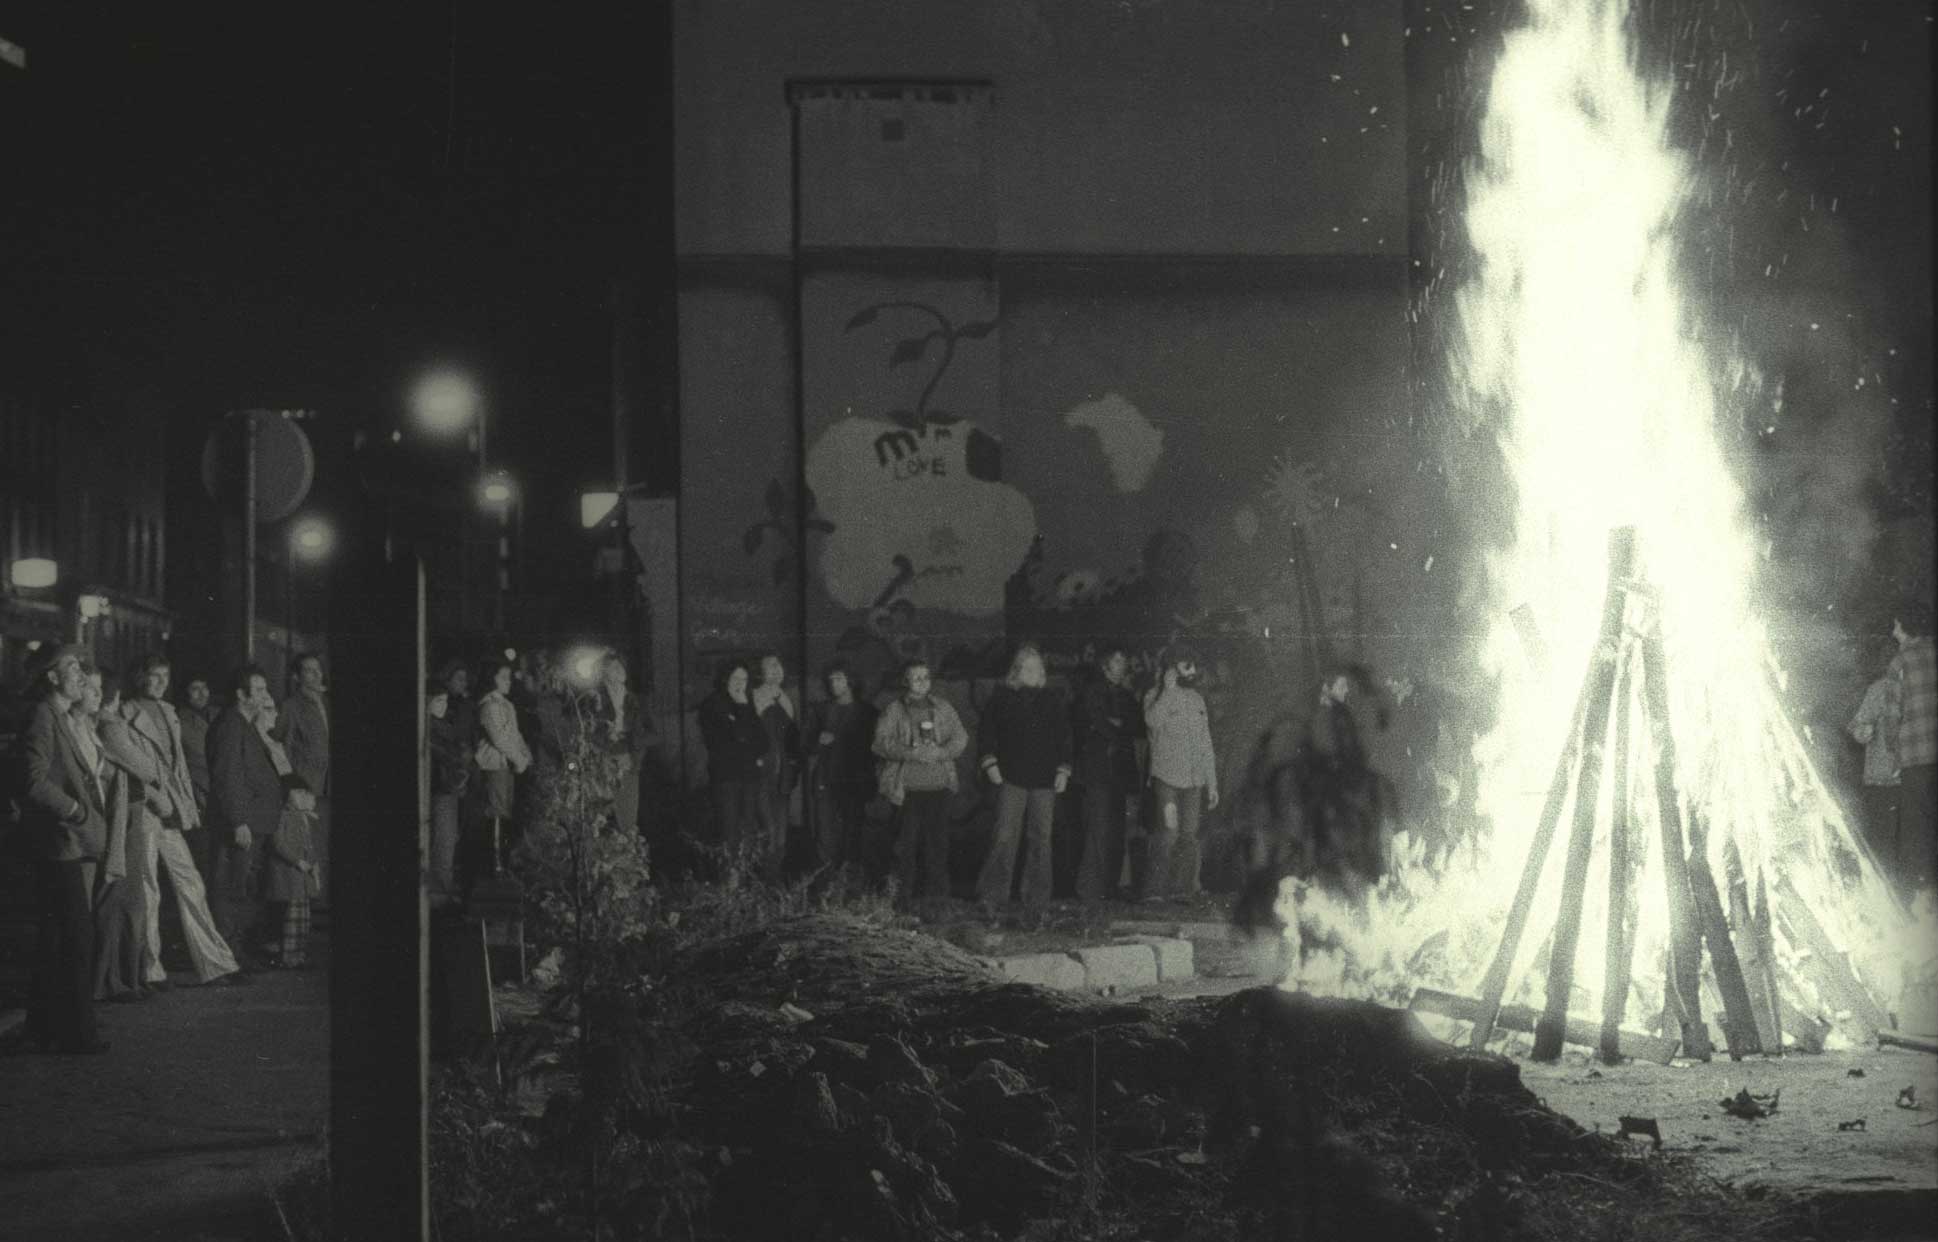 Bonfire night at the community garden, 1975